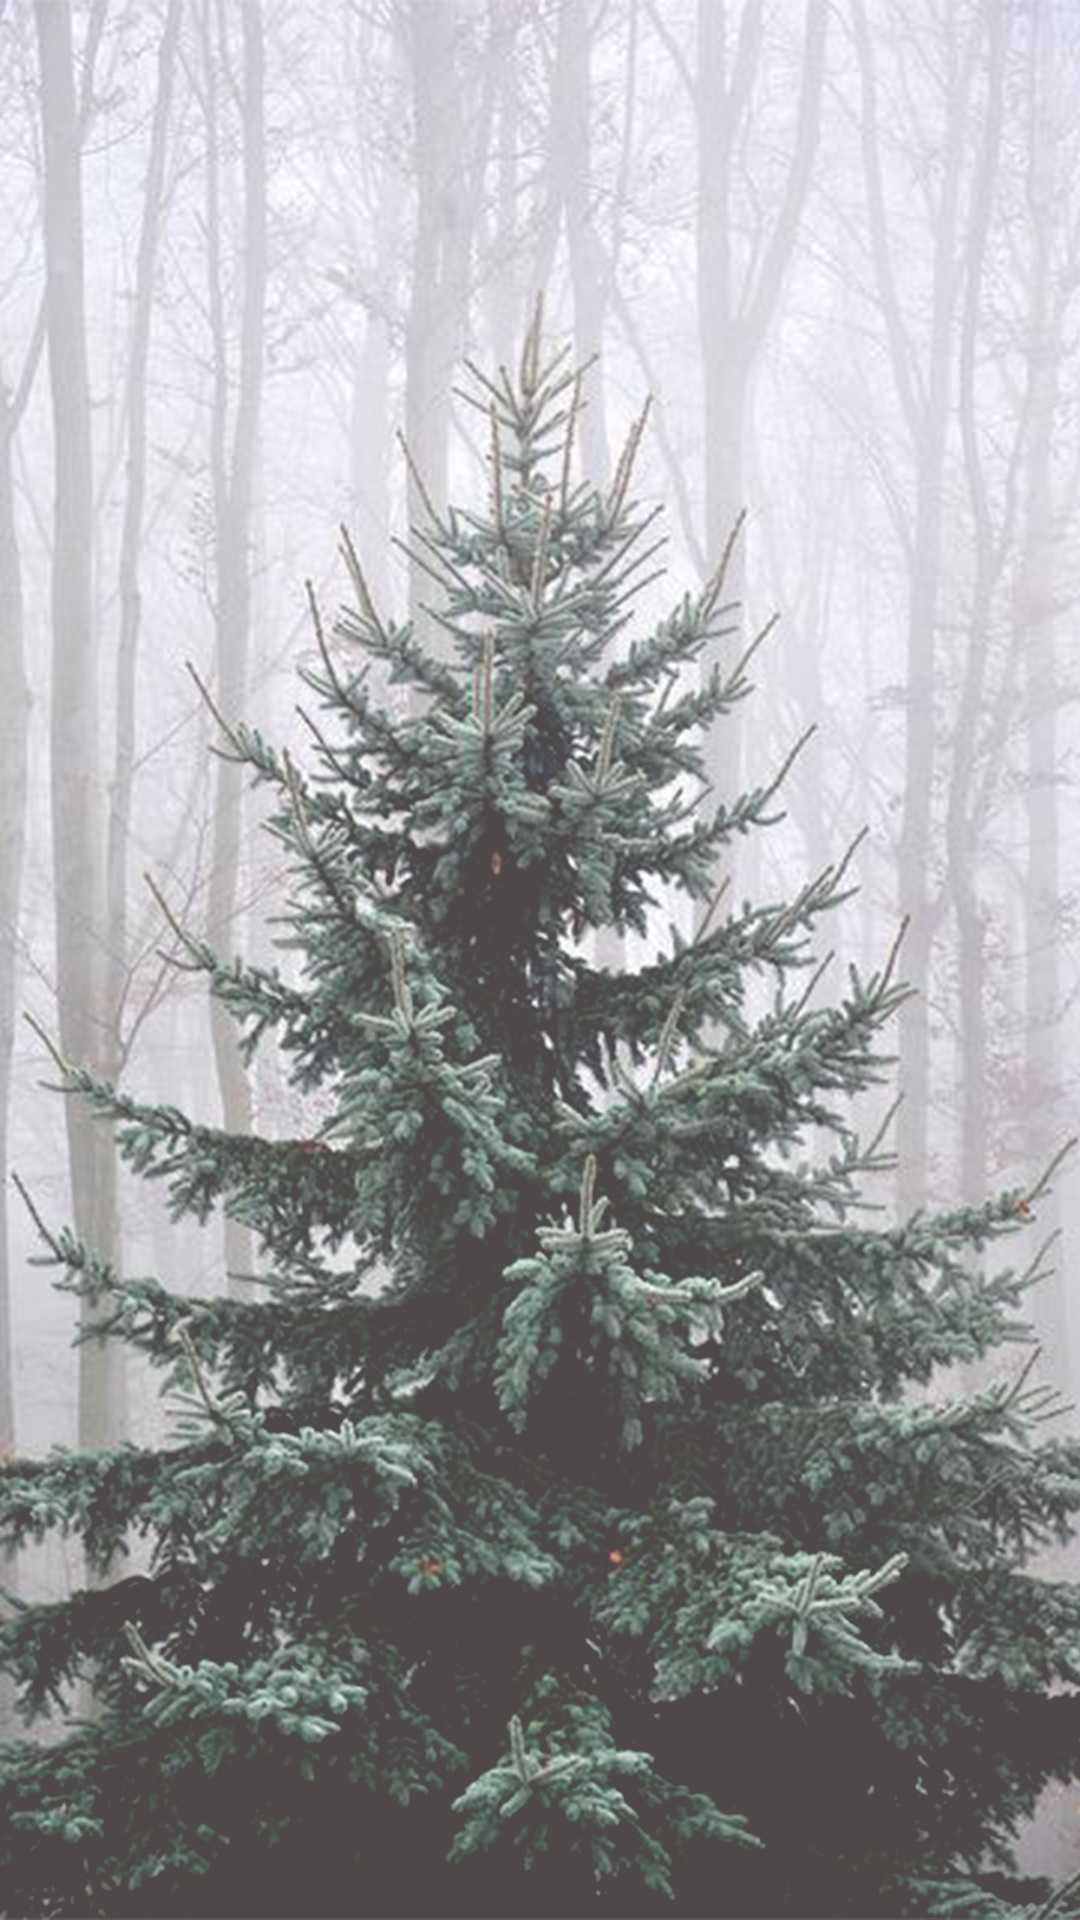 A christmas tree in the fog - Christmas, white Christmas